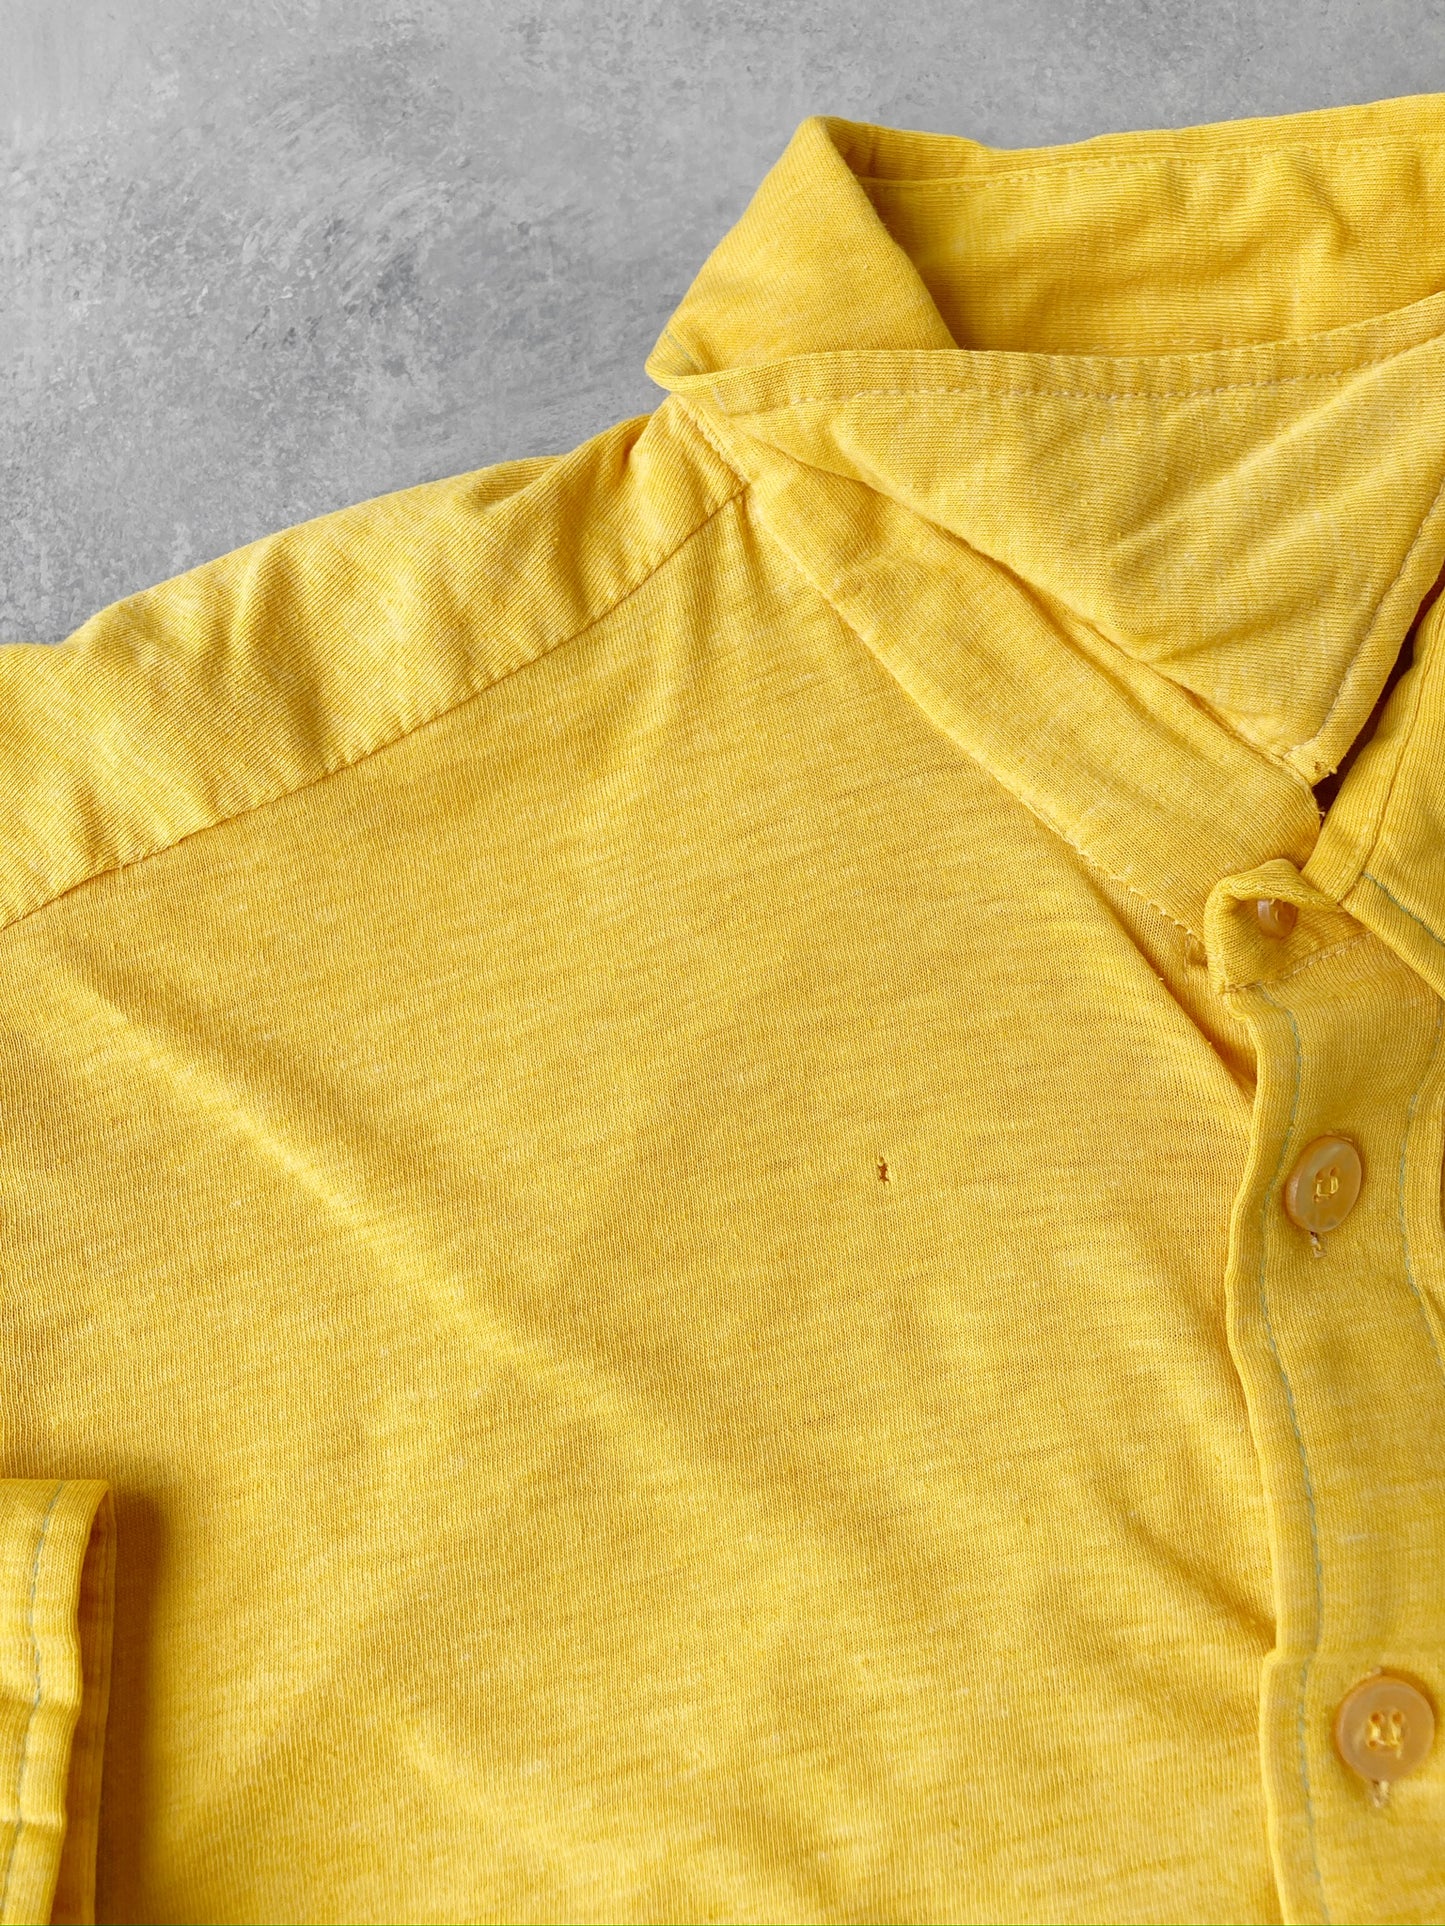 Pointed Collar Yellow Shirt 70's - Medium / Large